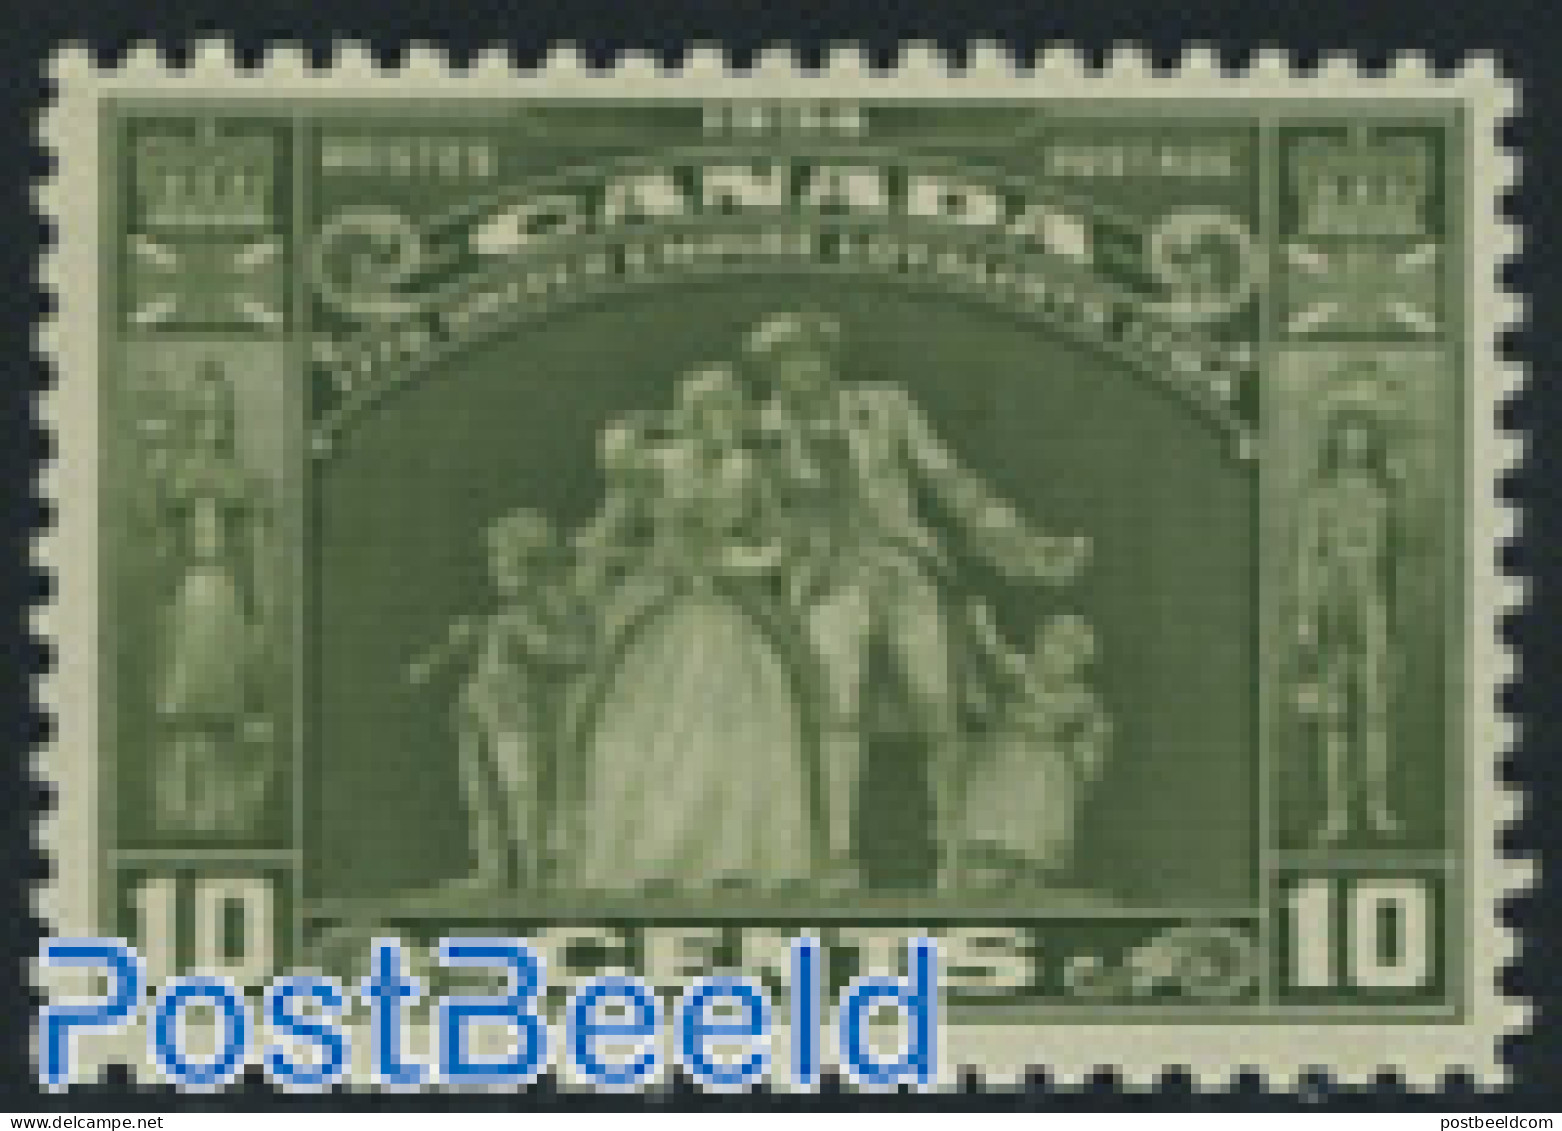 Canada 1934 United Empire Loyalists 1v, Mint NH - Neufs